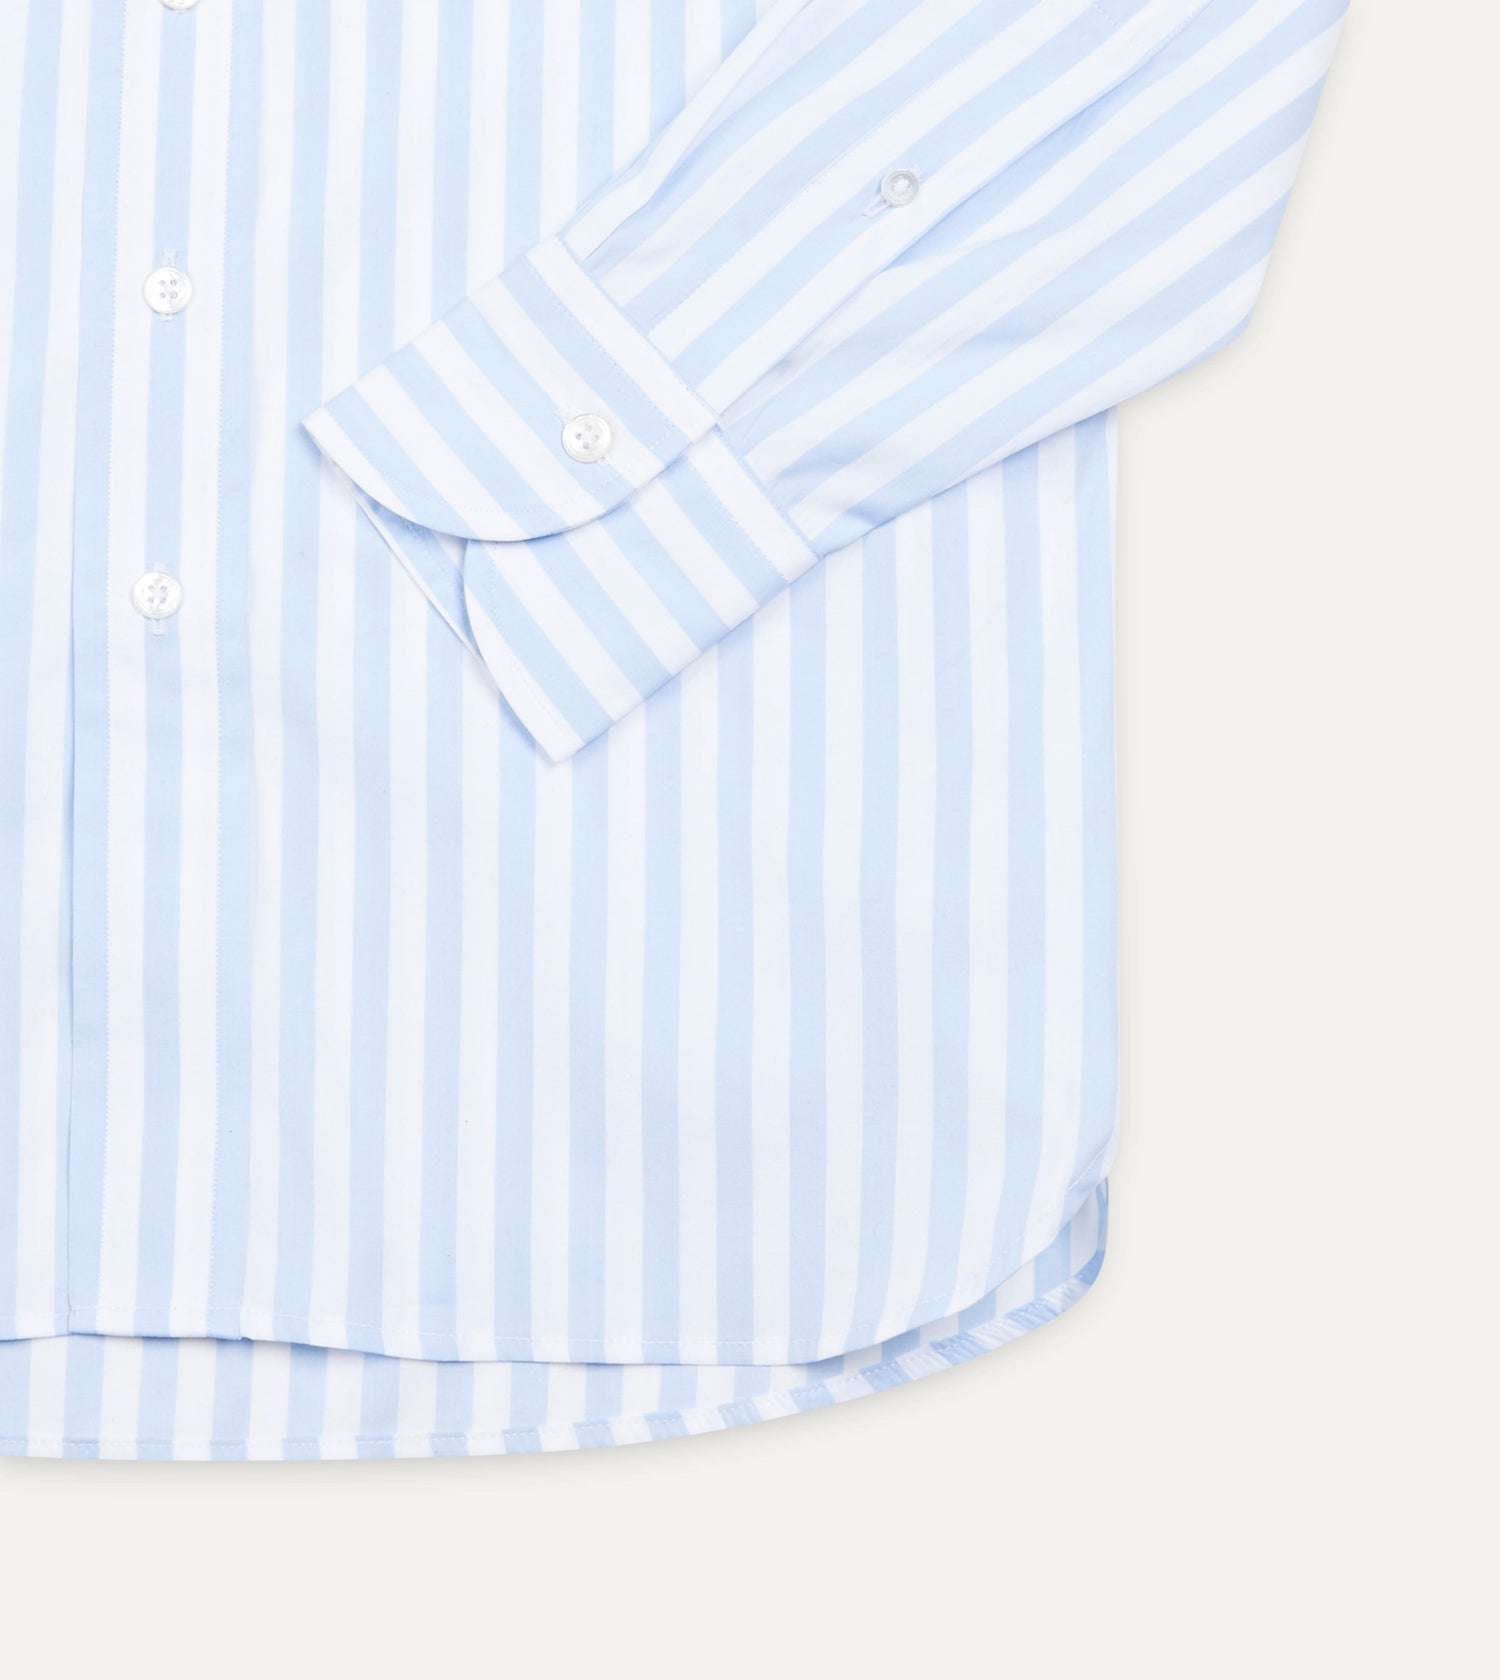 Blue Broad Stripe Cotton Poplin Button-Down Shirt